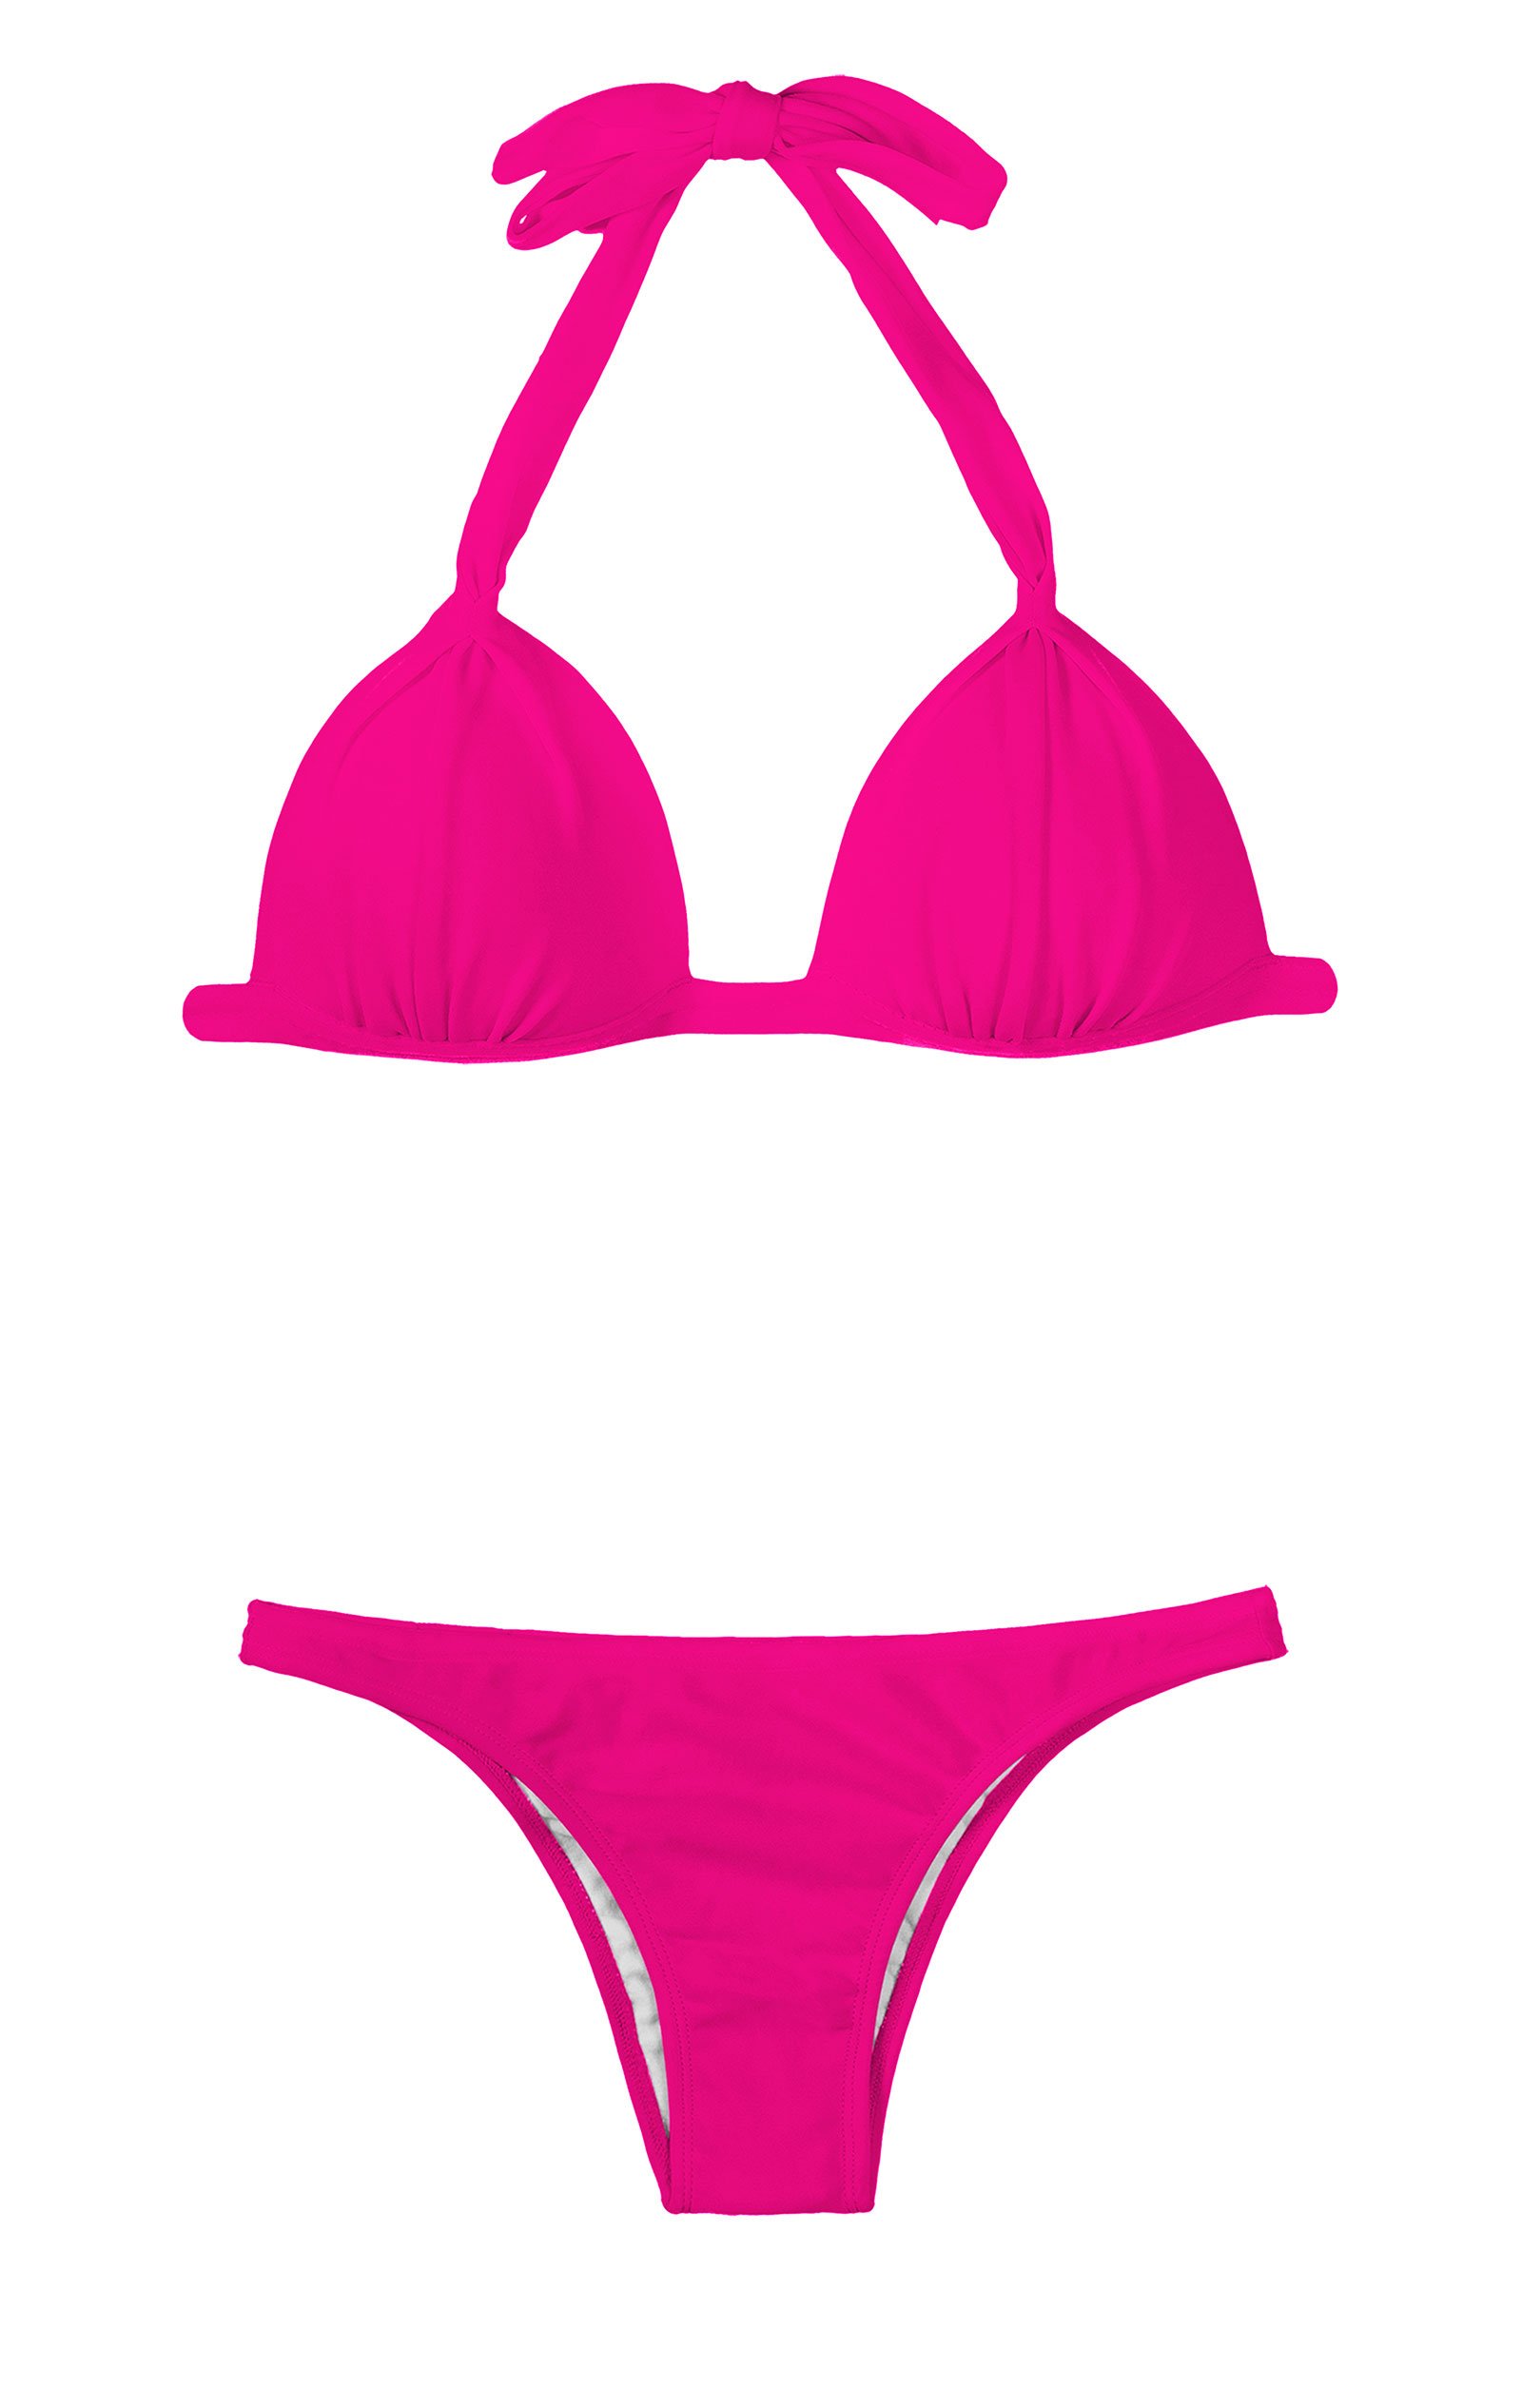 Violeta From Abbywinters Wearing Pink Bikini Tgp Gallery My Xxx Hot Girl